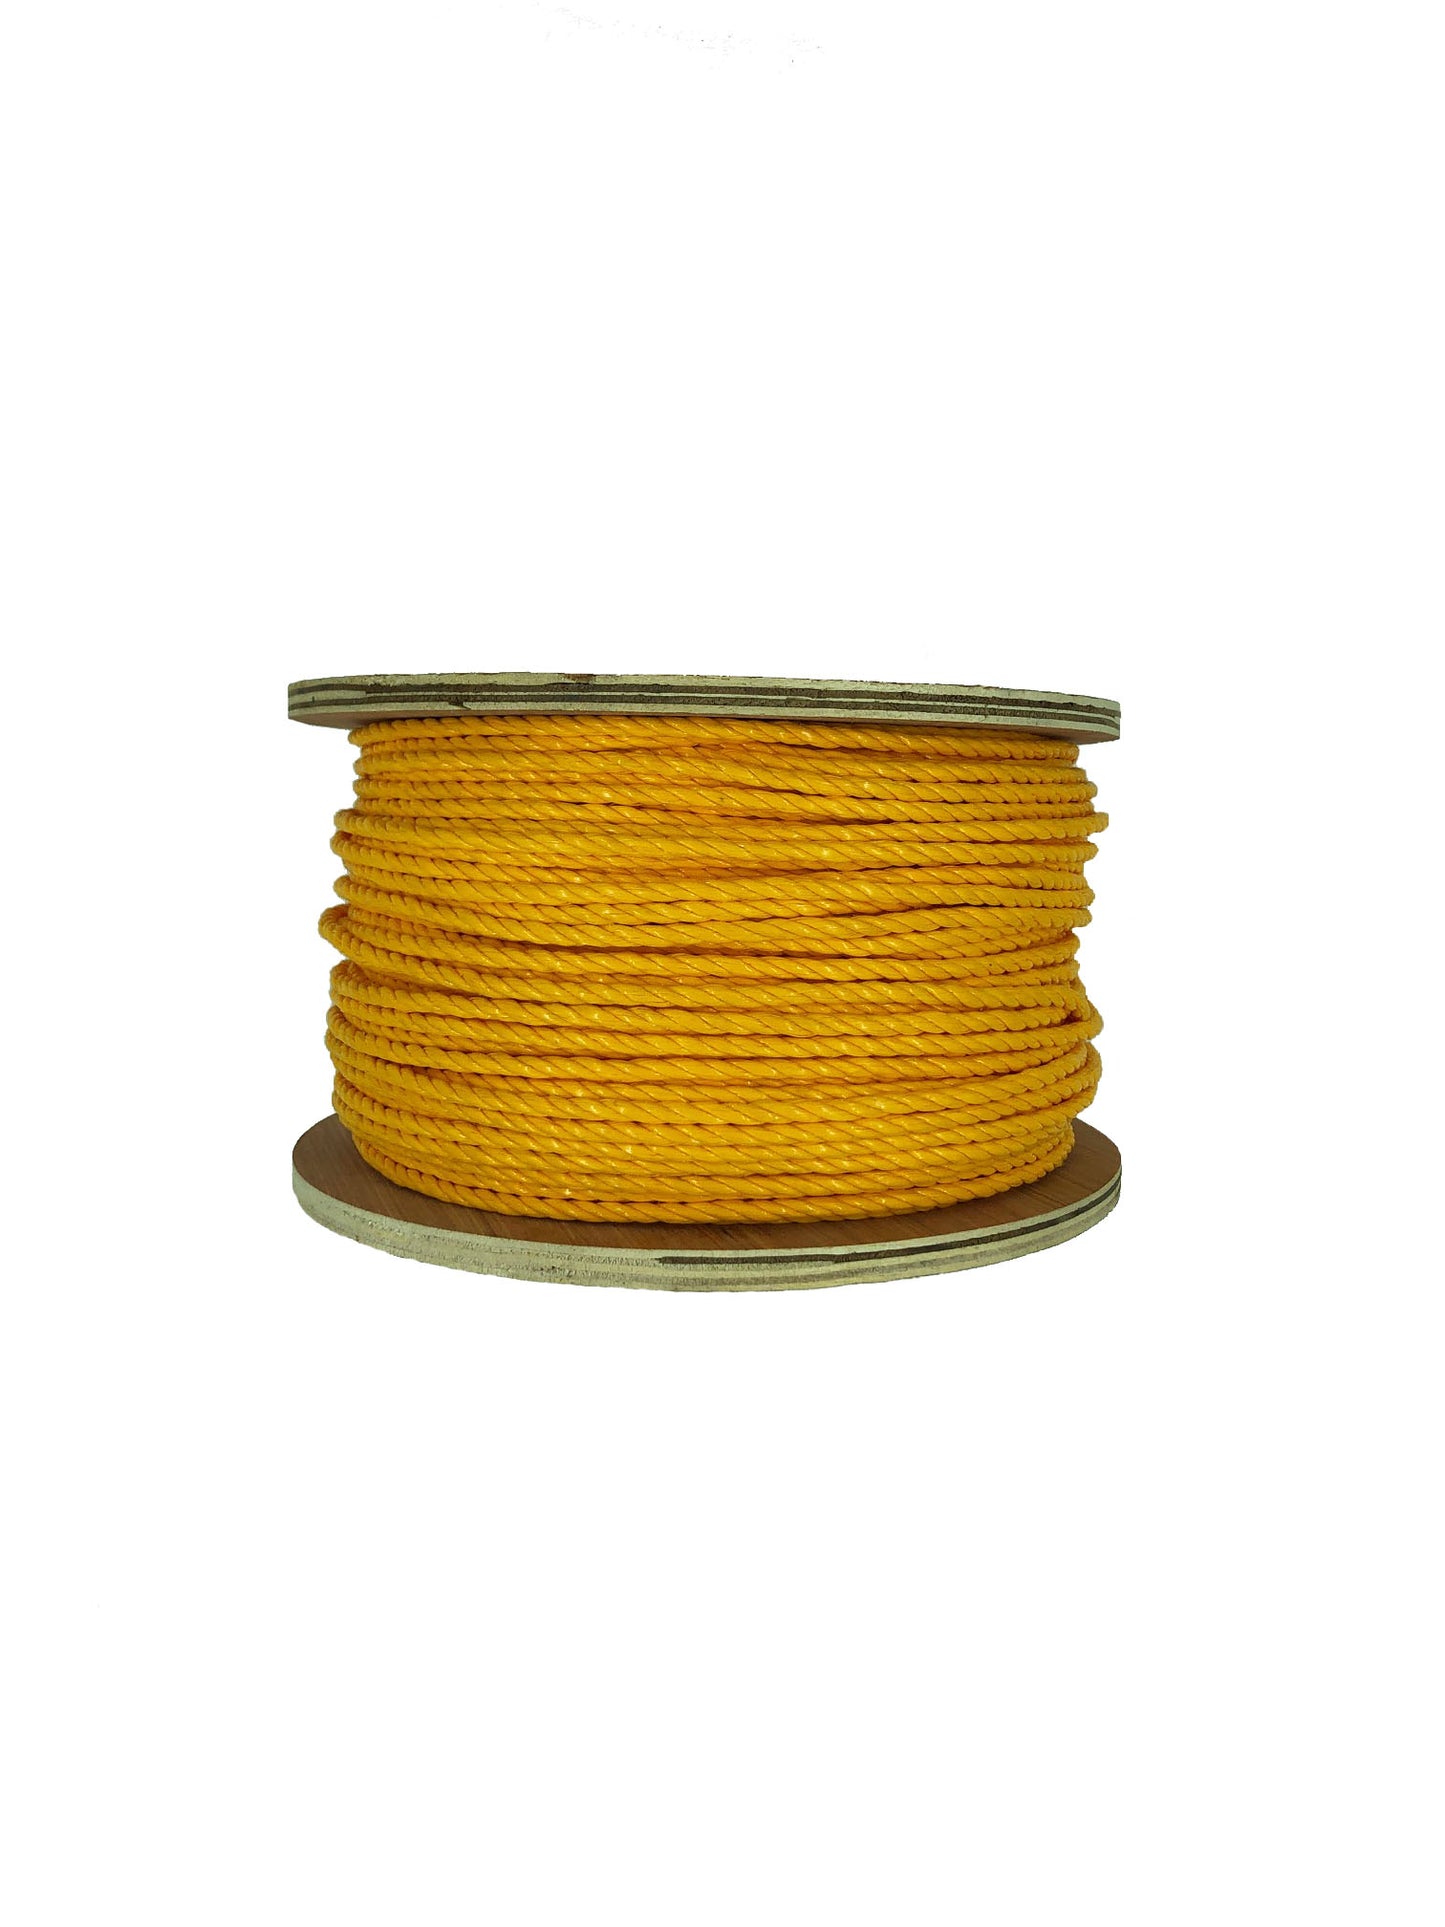 1/4" X 600' Yellow 3-Strand Twisted Polypropylene Rope